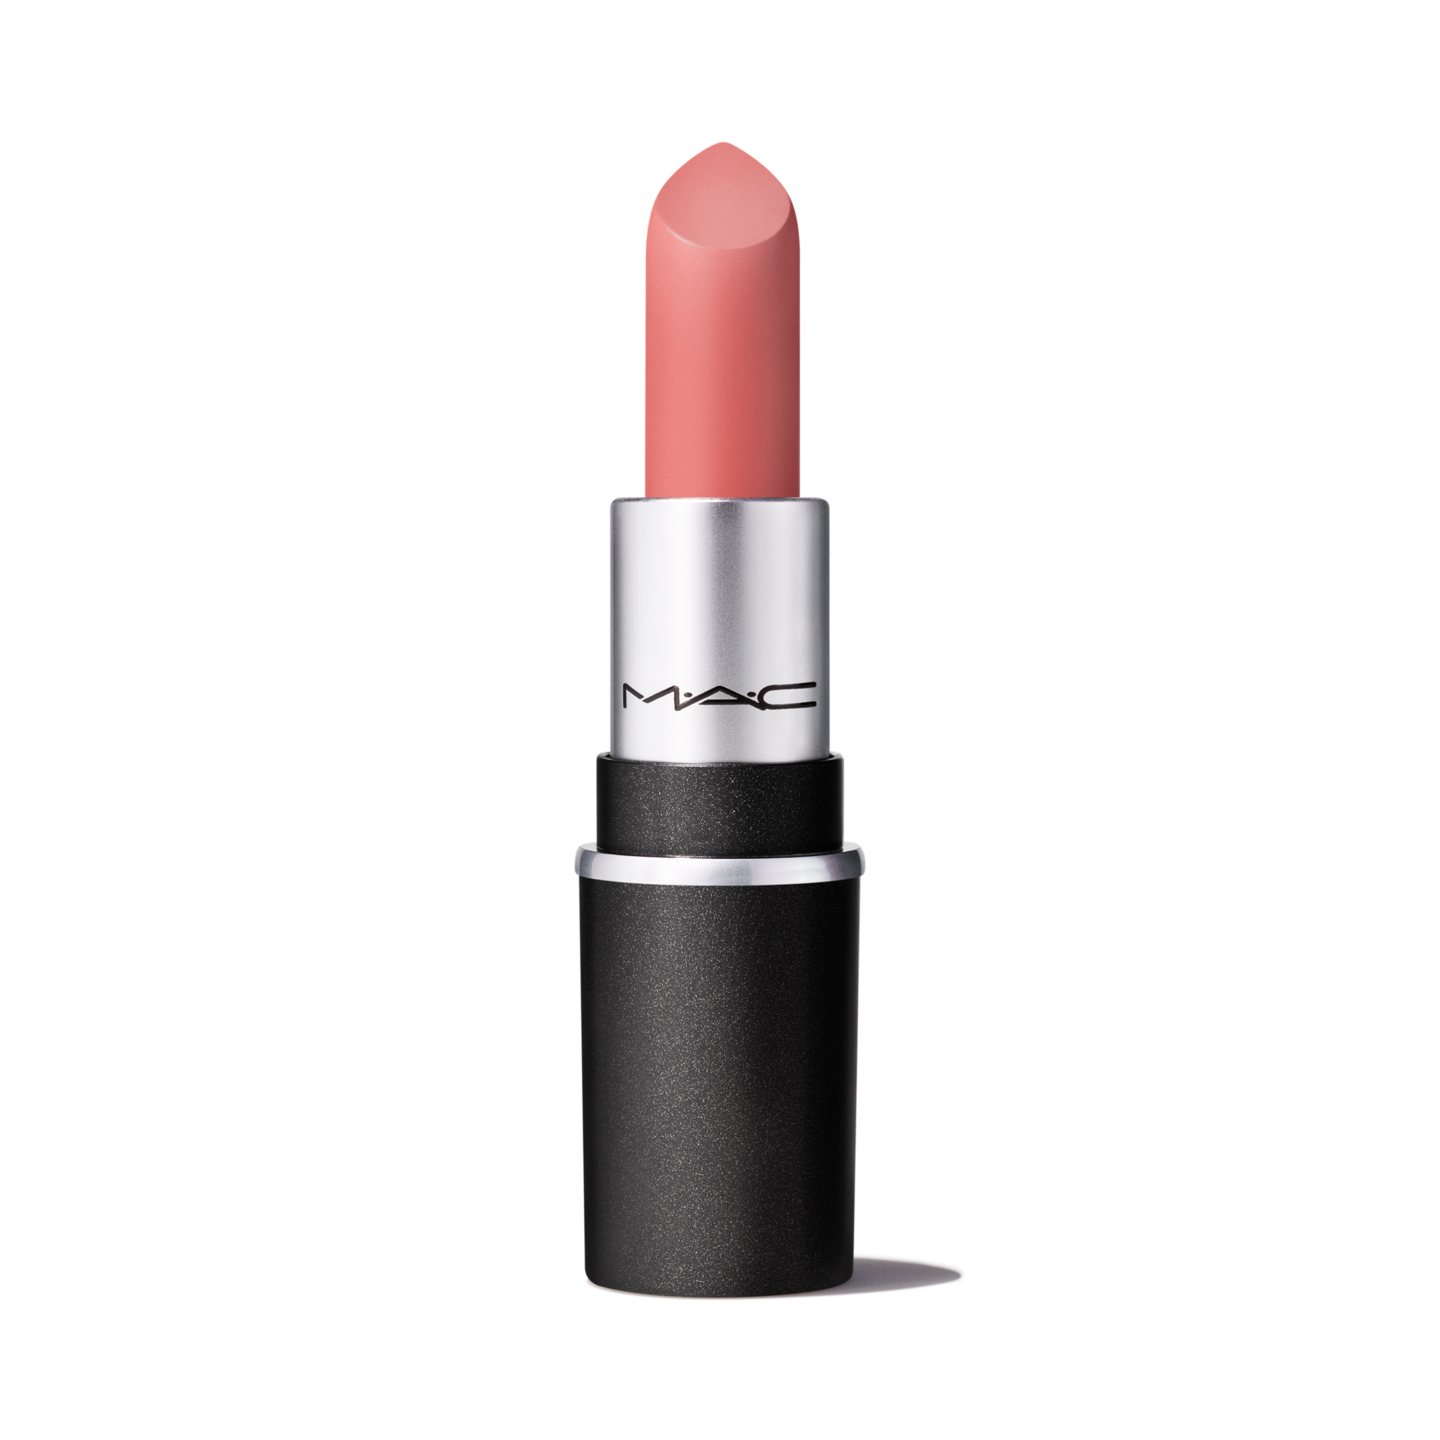 Mini MAC Size Lipstick | Ruby Woo & Velvet Teddy Minis | MAC Cosmetics - Official Site